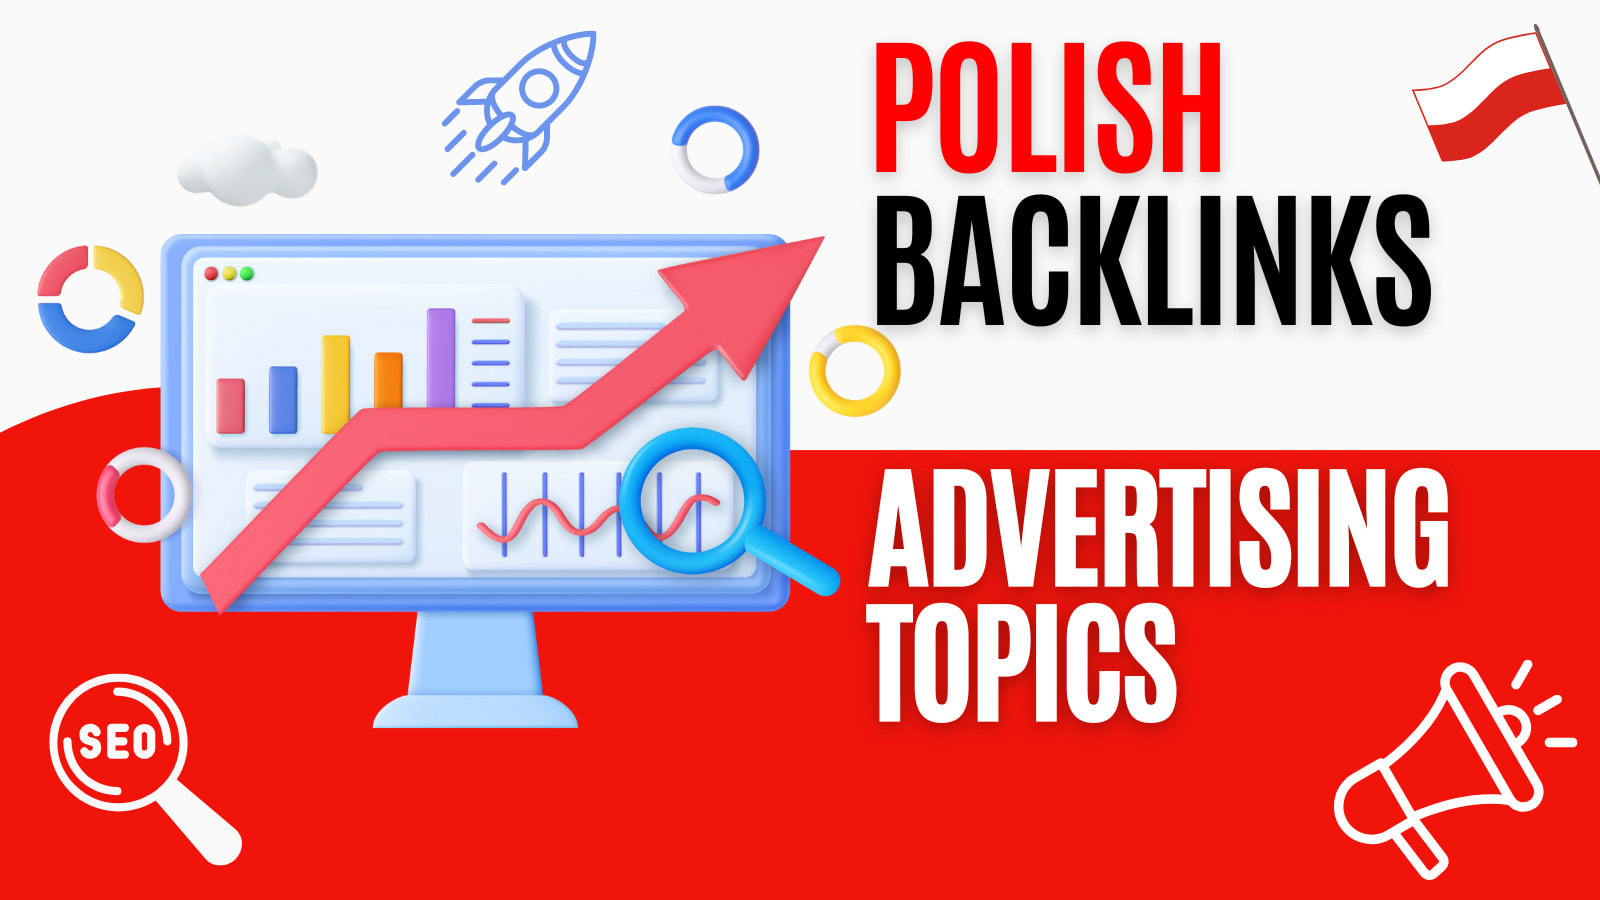 25 advertising topics on polish discussion forums | POLISH MANUAL SEO | 